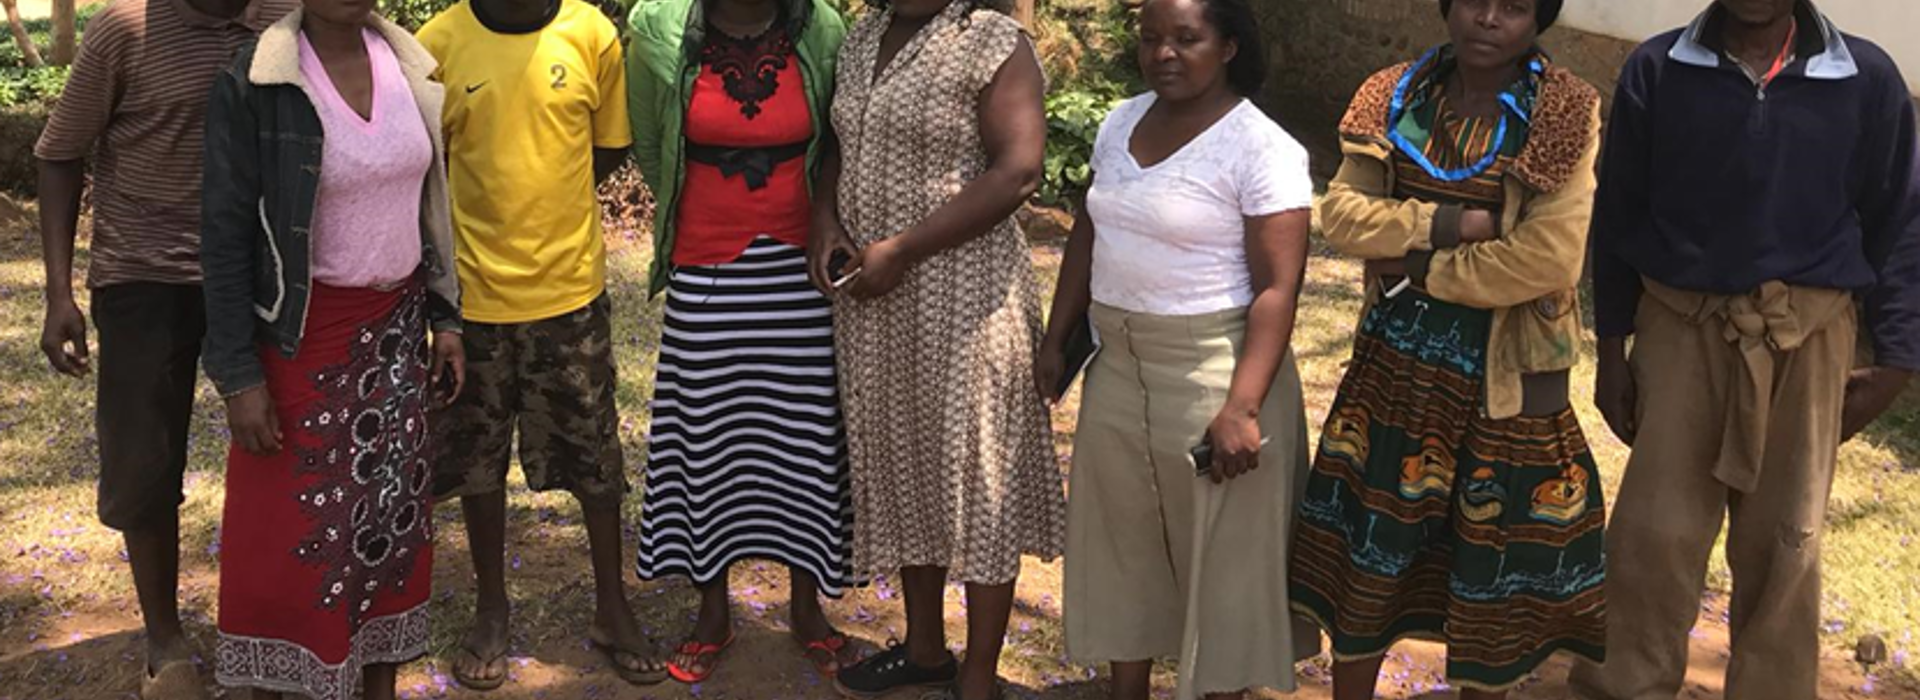 Members of 3 Village Savings and Loan Associations in Malawi